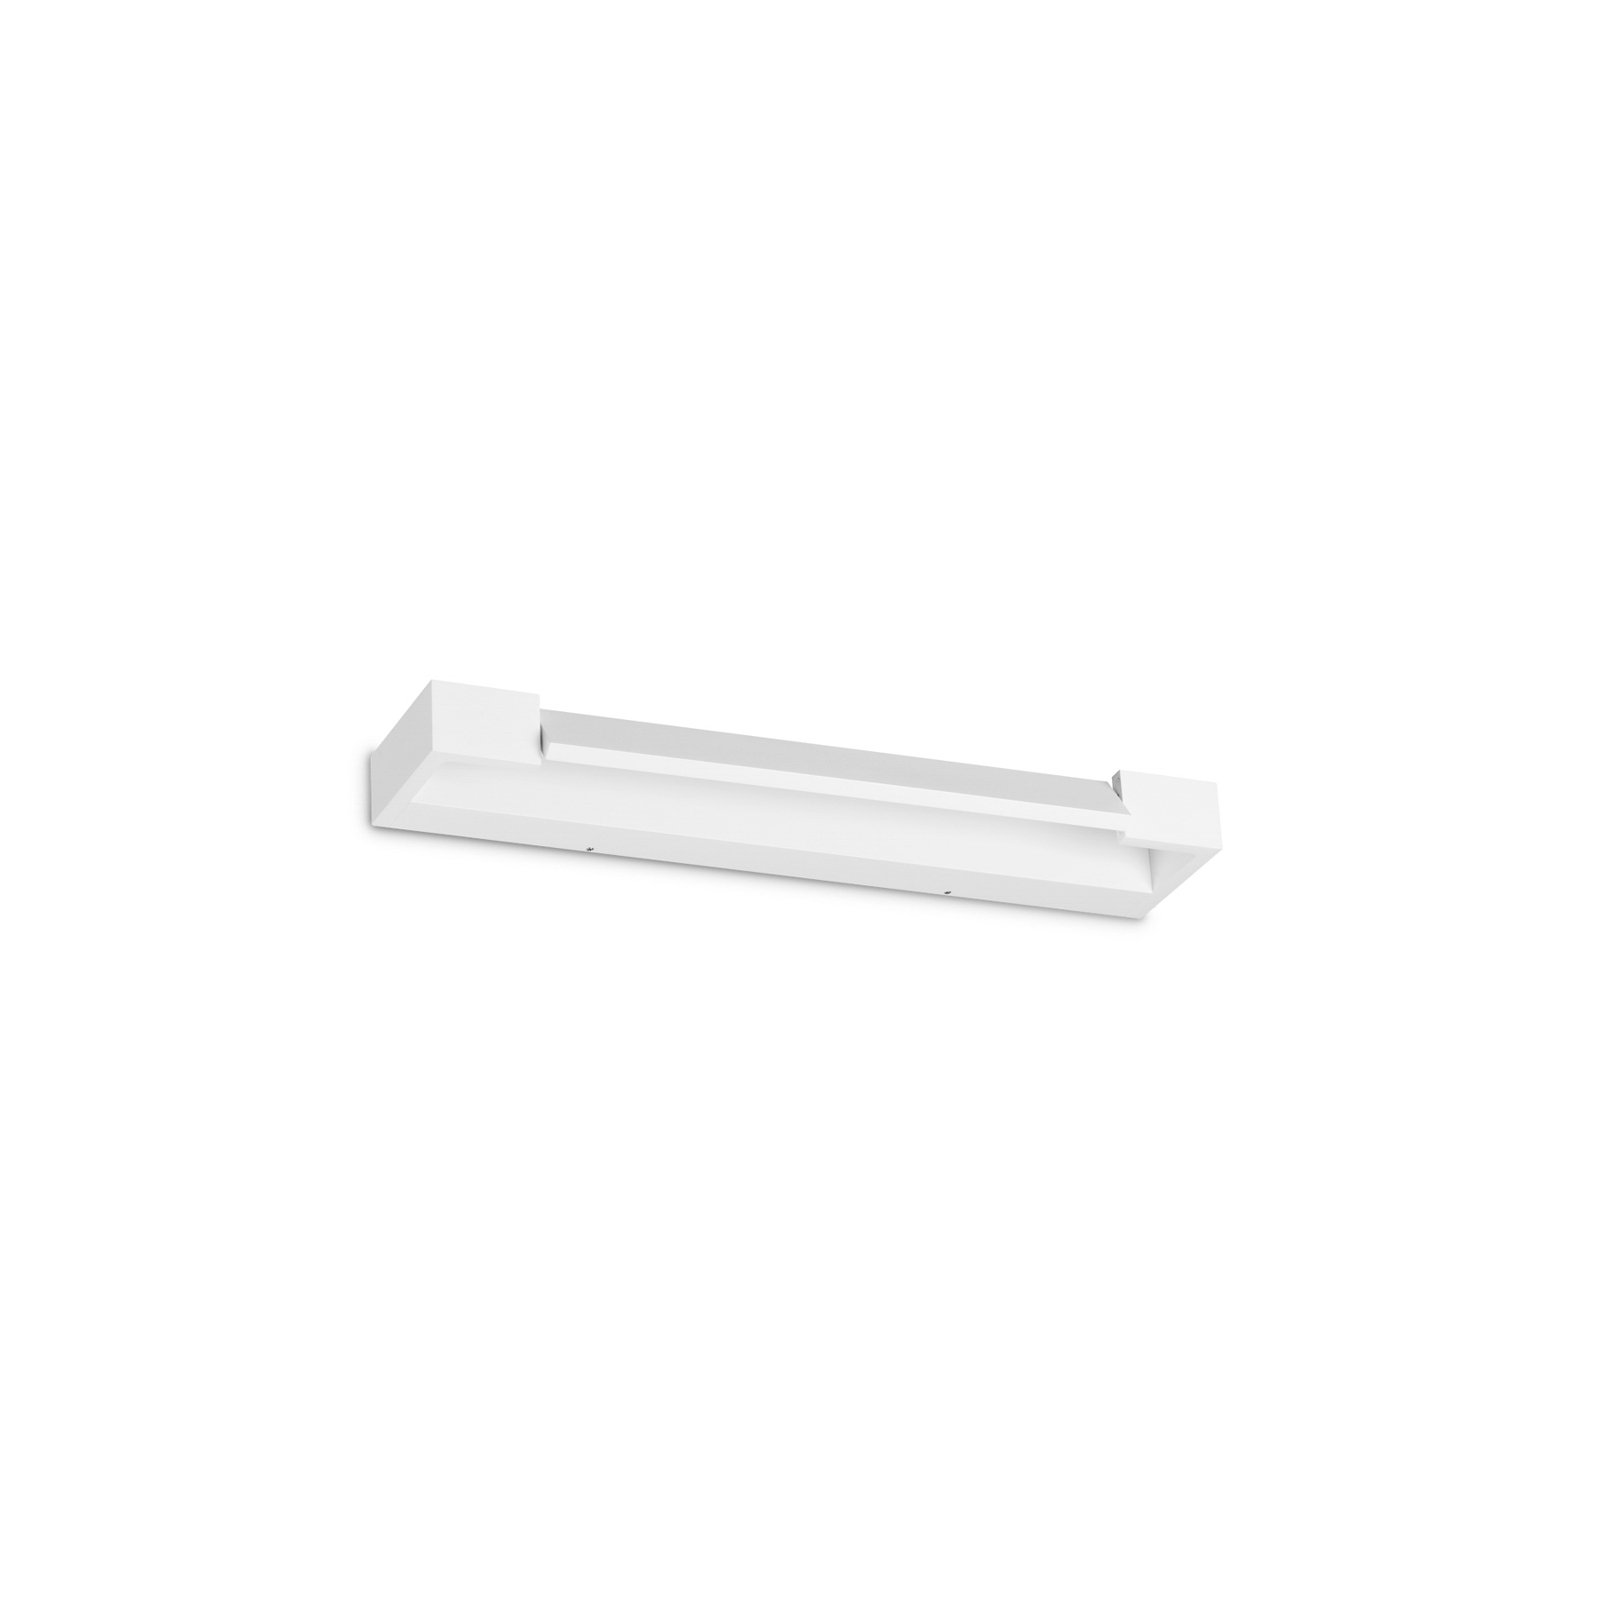 Ideal Lux LED stenska svetilka Balance white, kovinska, širina 45 cm